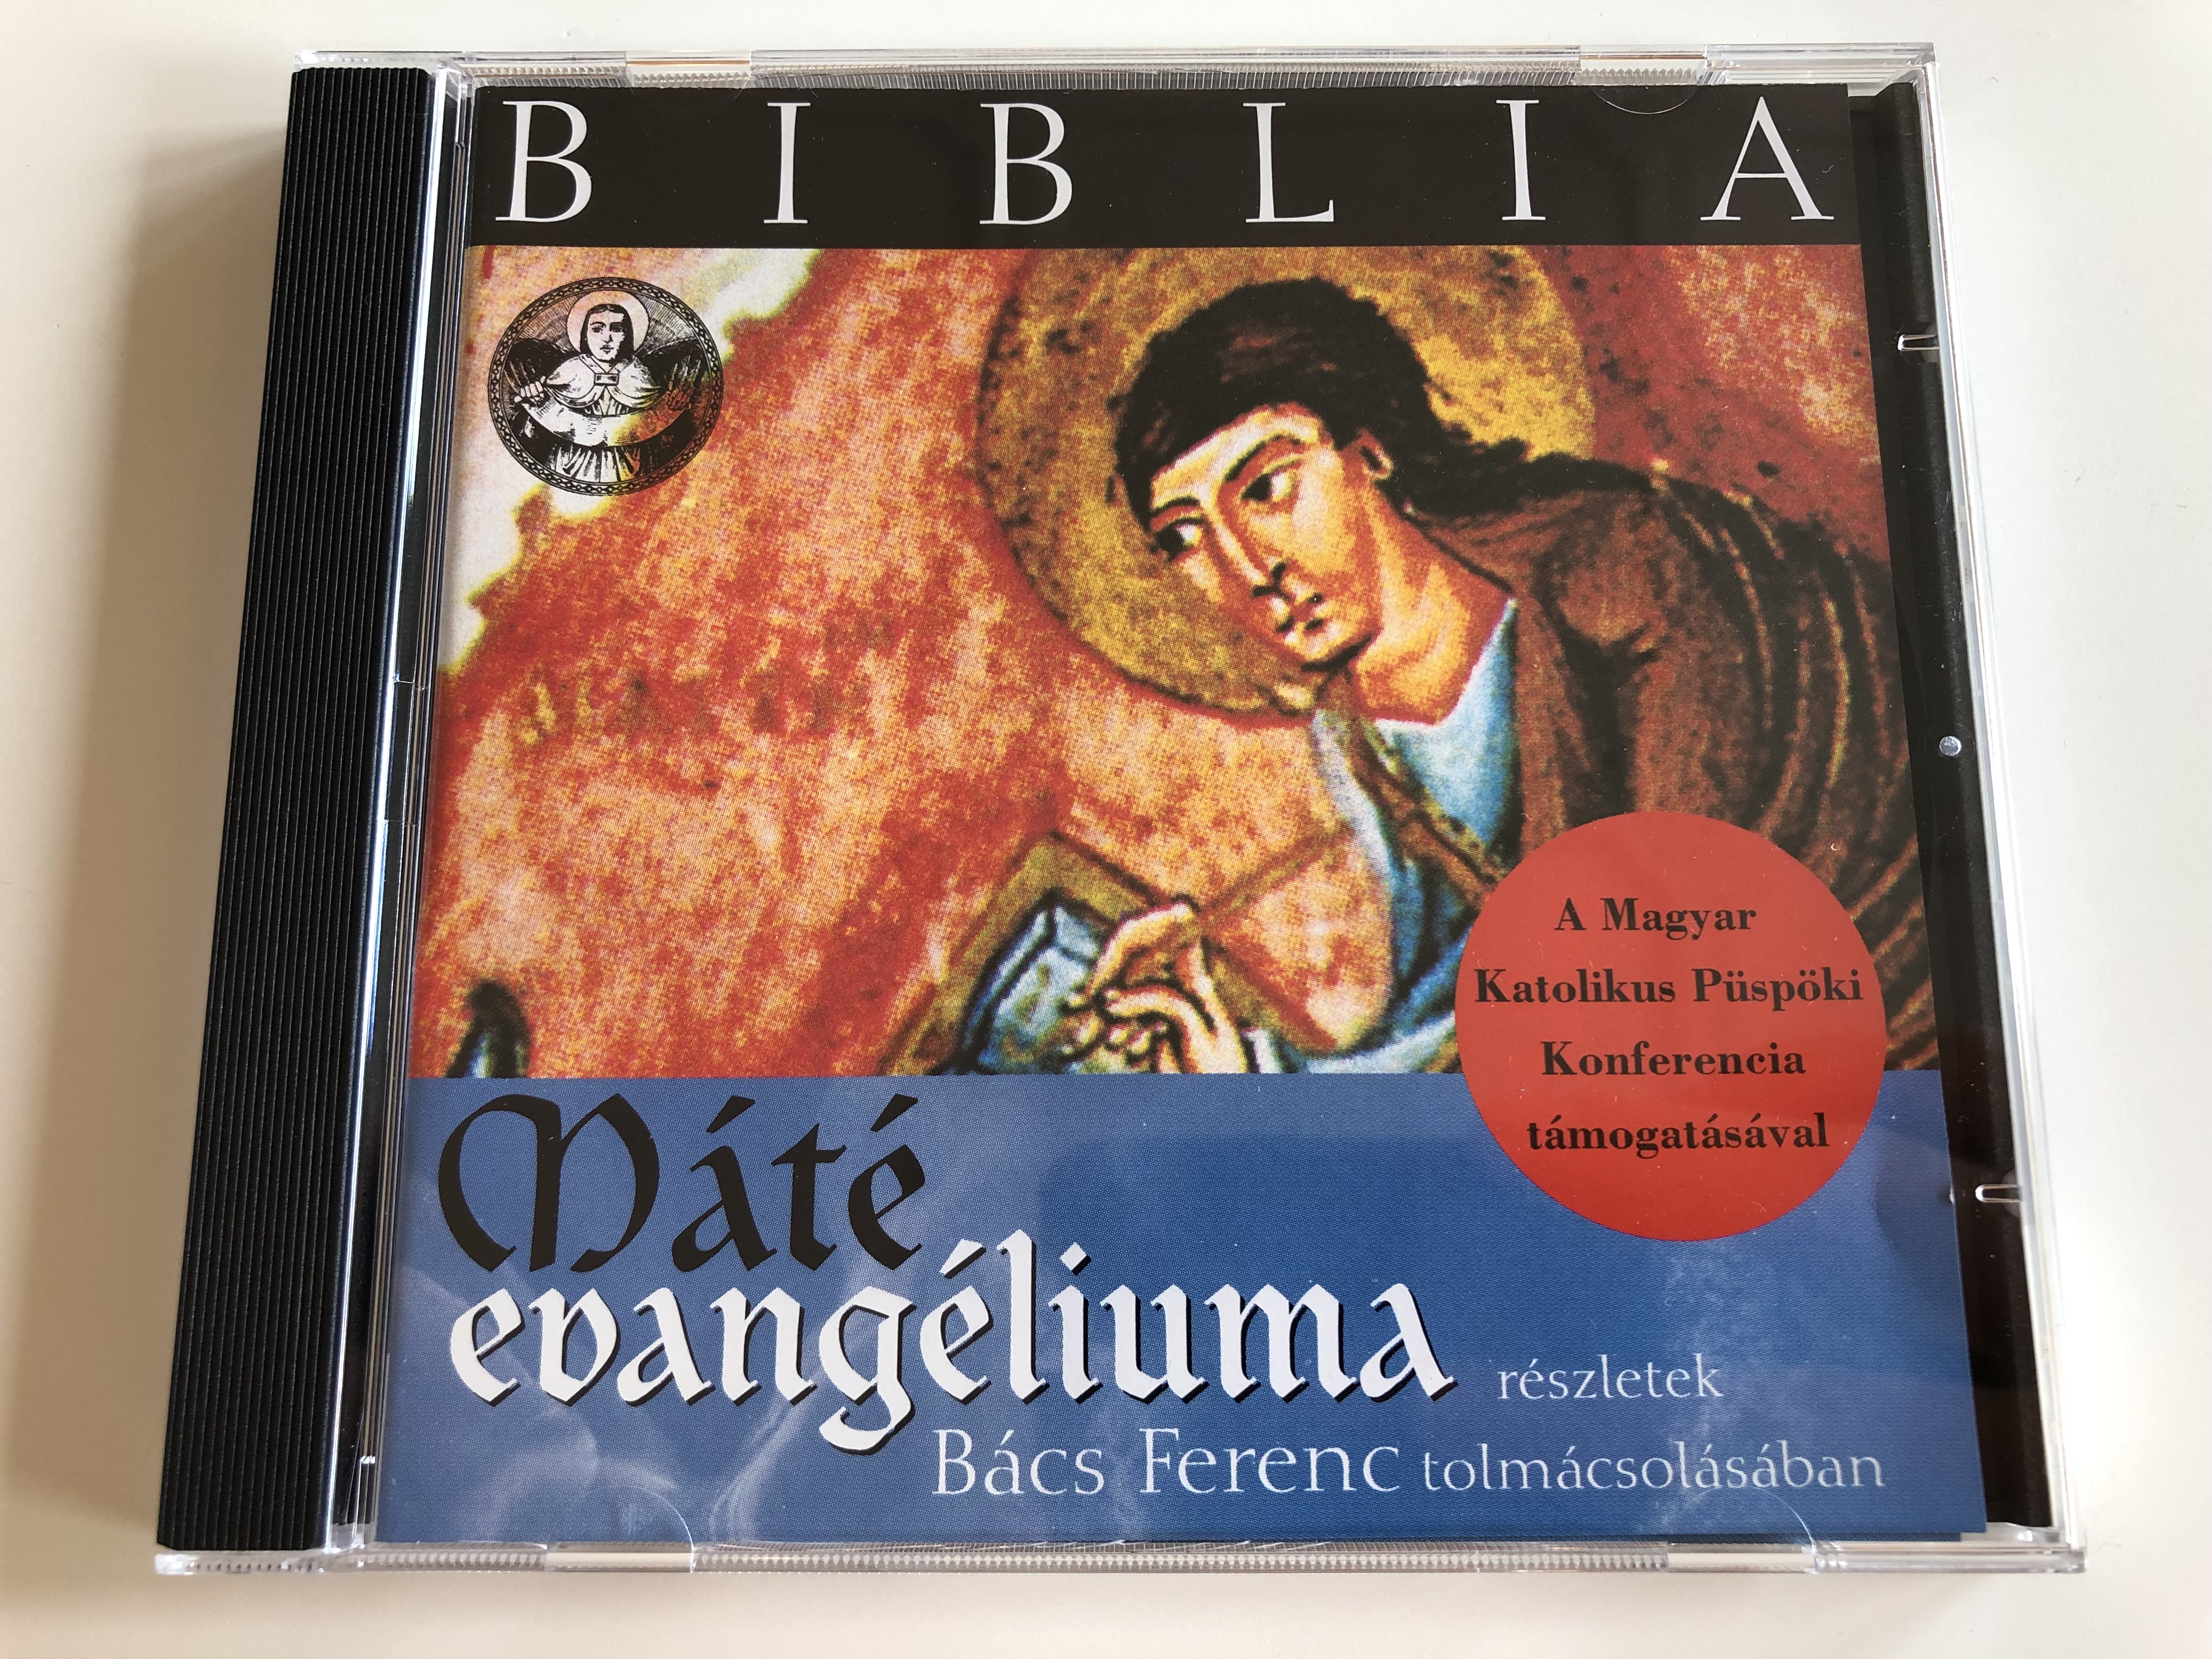 m-t-evang-liuma-r-szletek-audio-cd-2001-biblia-the-gospel-according-to-matthew-in-hungarian-language-excerpts-1.jpg